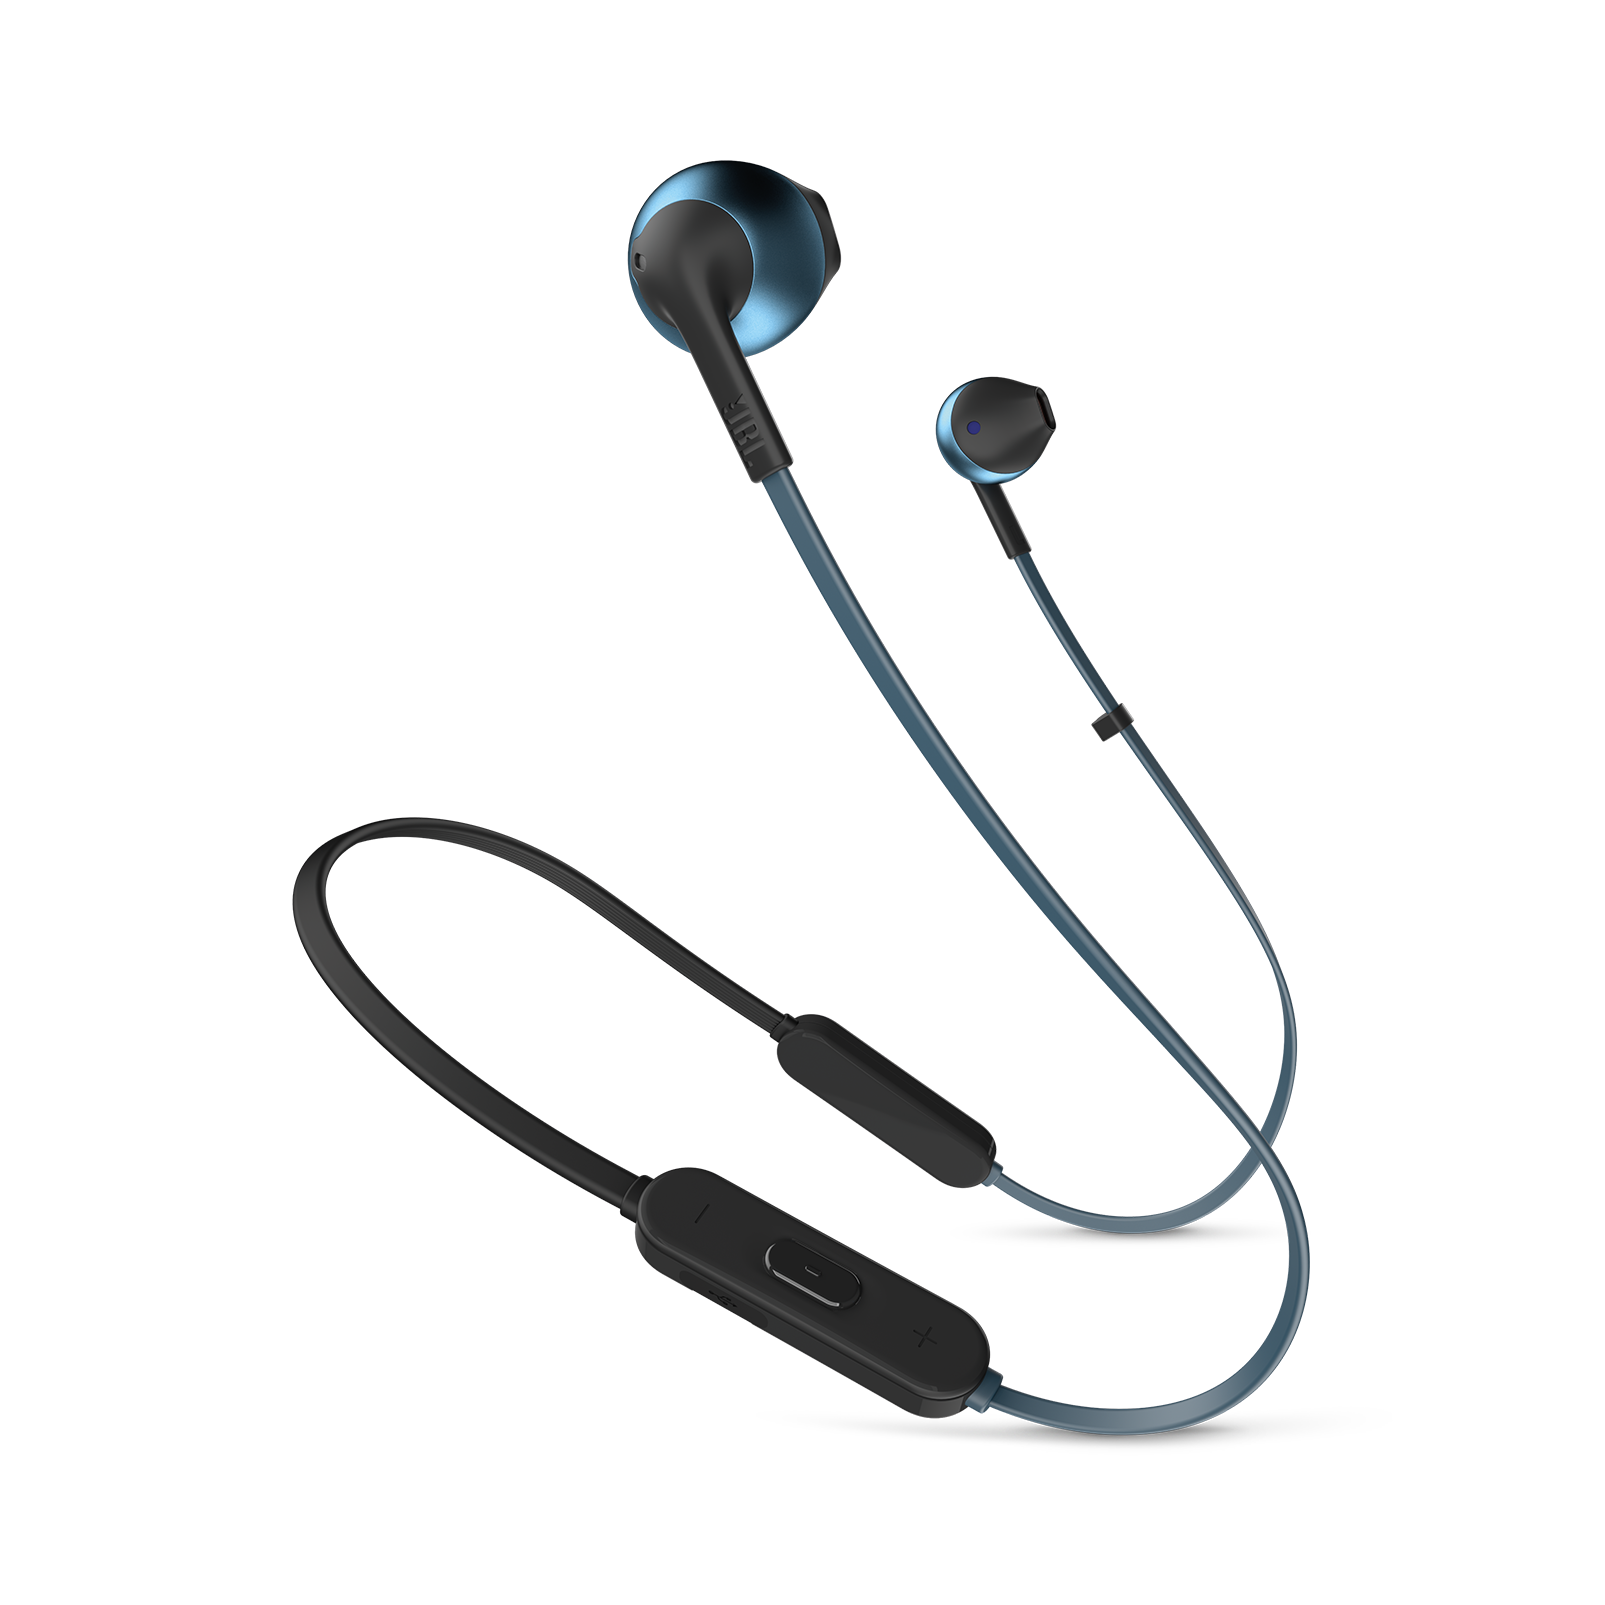 JBL Tune 205BT - Blue - Wireless Earbud headphones - Hero